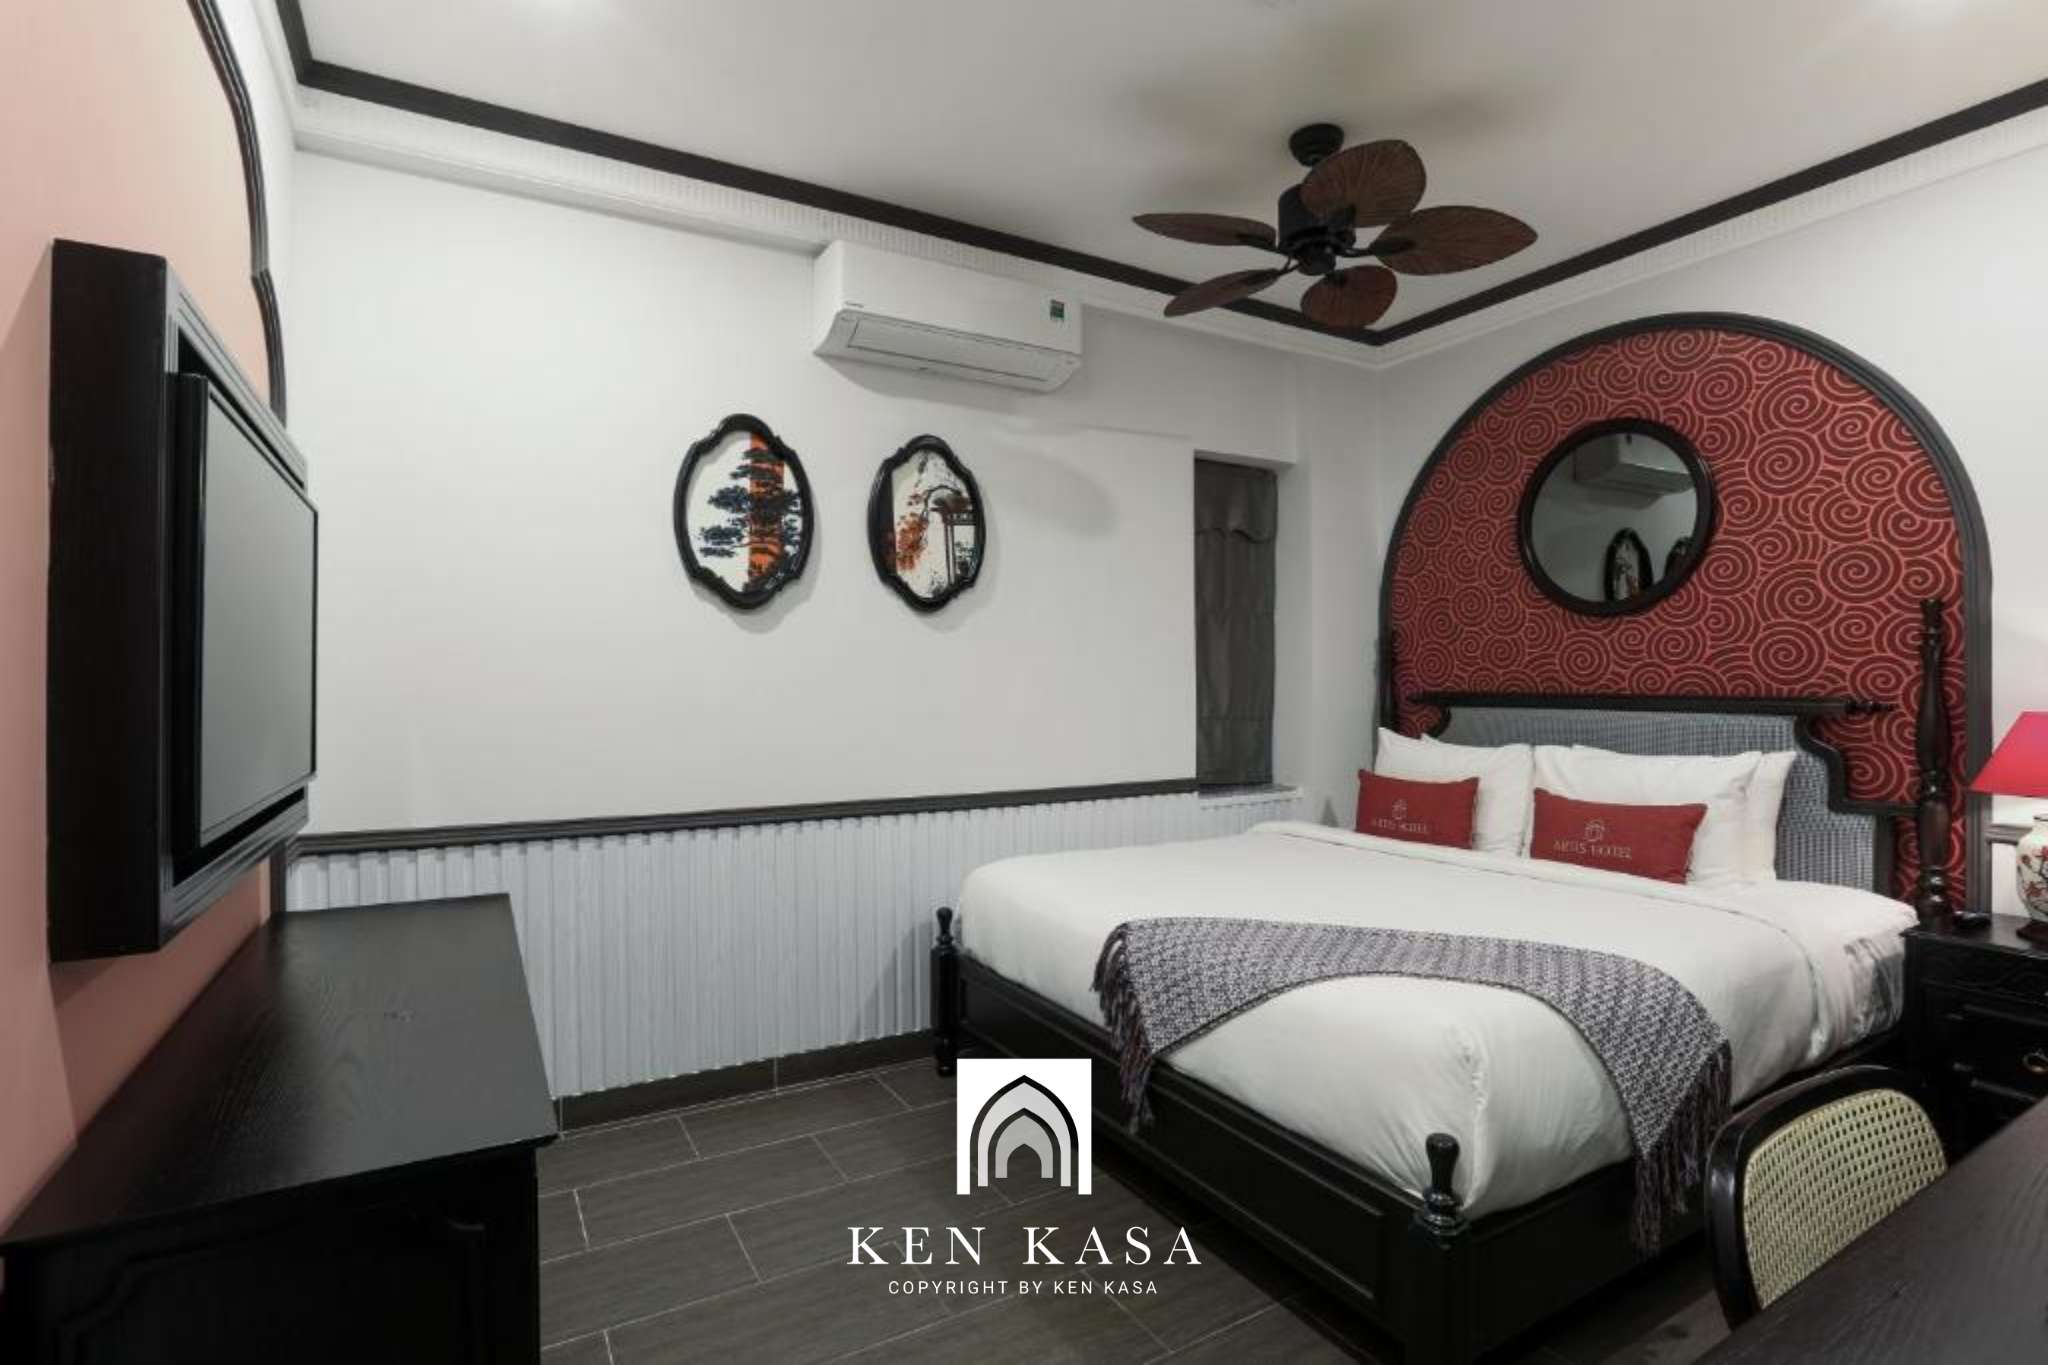 Standard king bedroom tại Artis Hotel Đà Lạt 